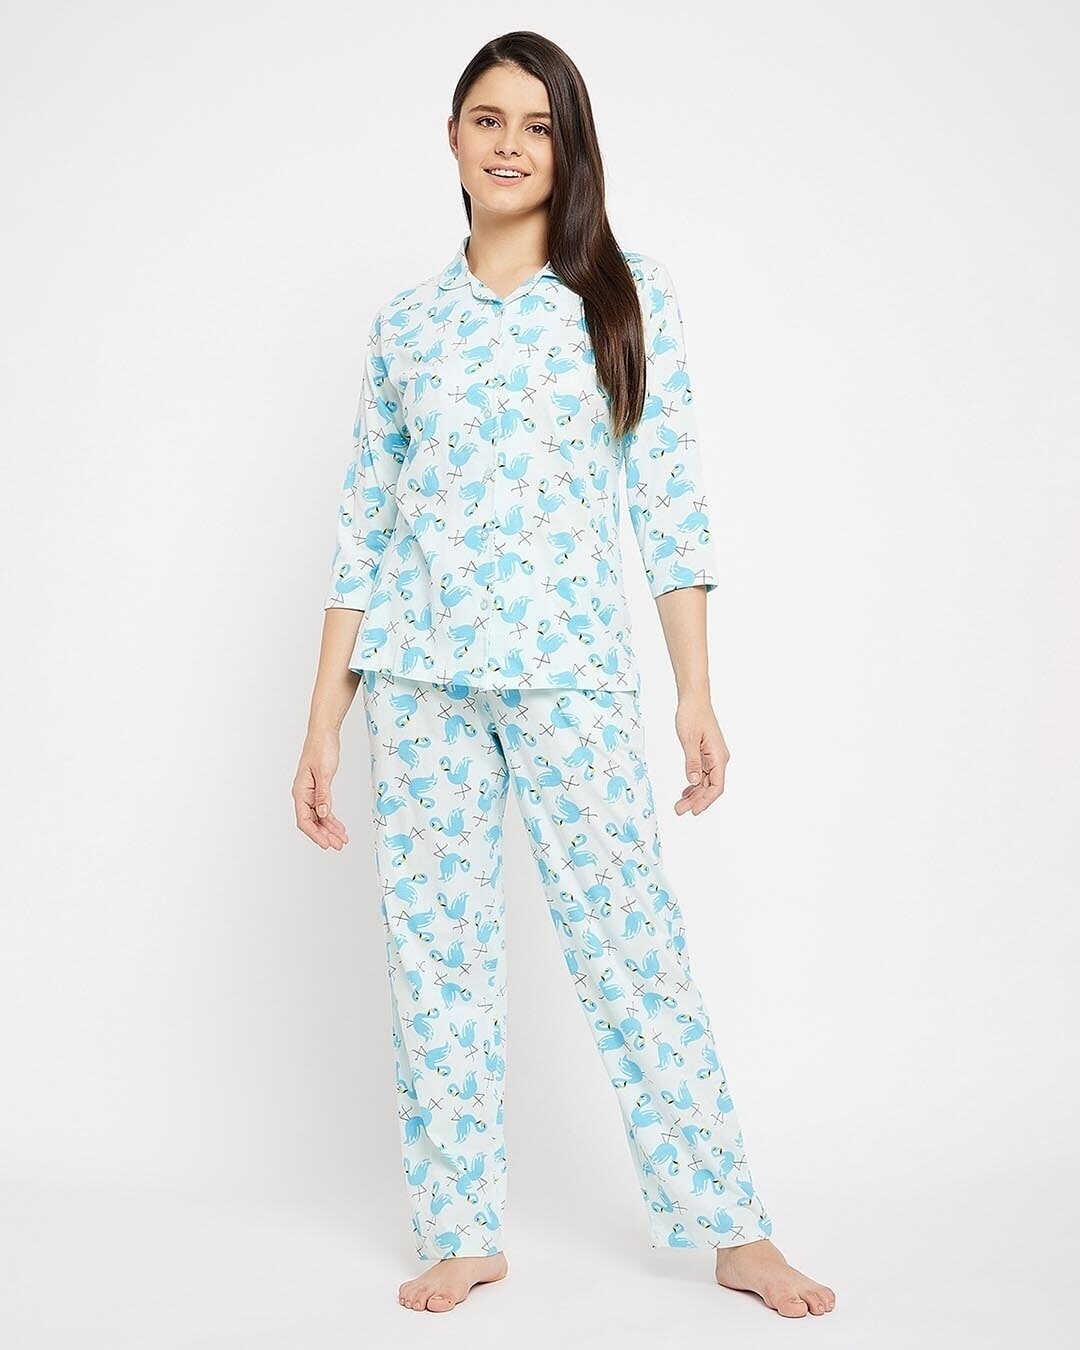 Shop Women's Blue Printed Top & Pyjama Set (Pack of 2)